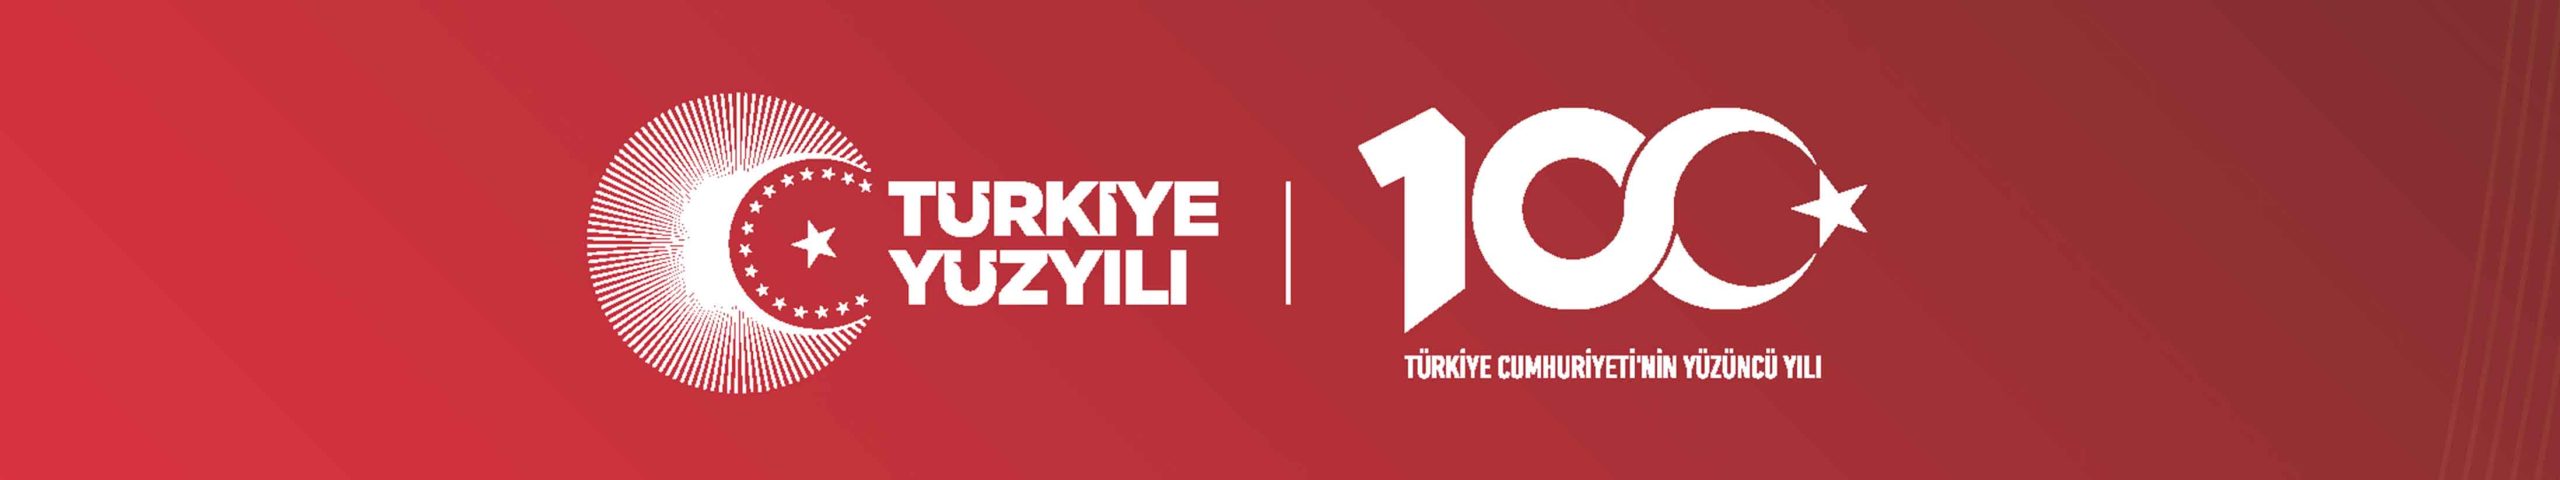 turkiye 100a scaled